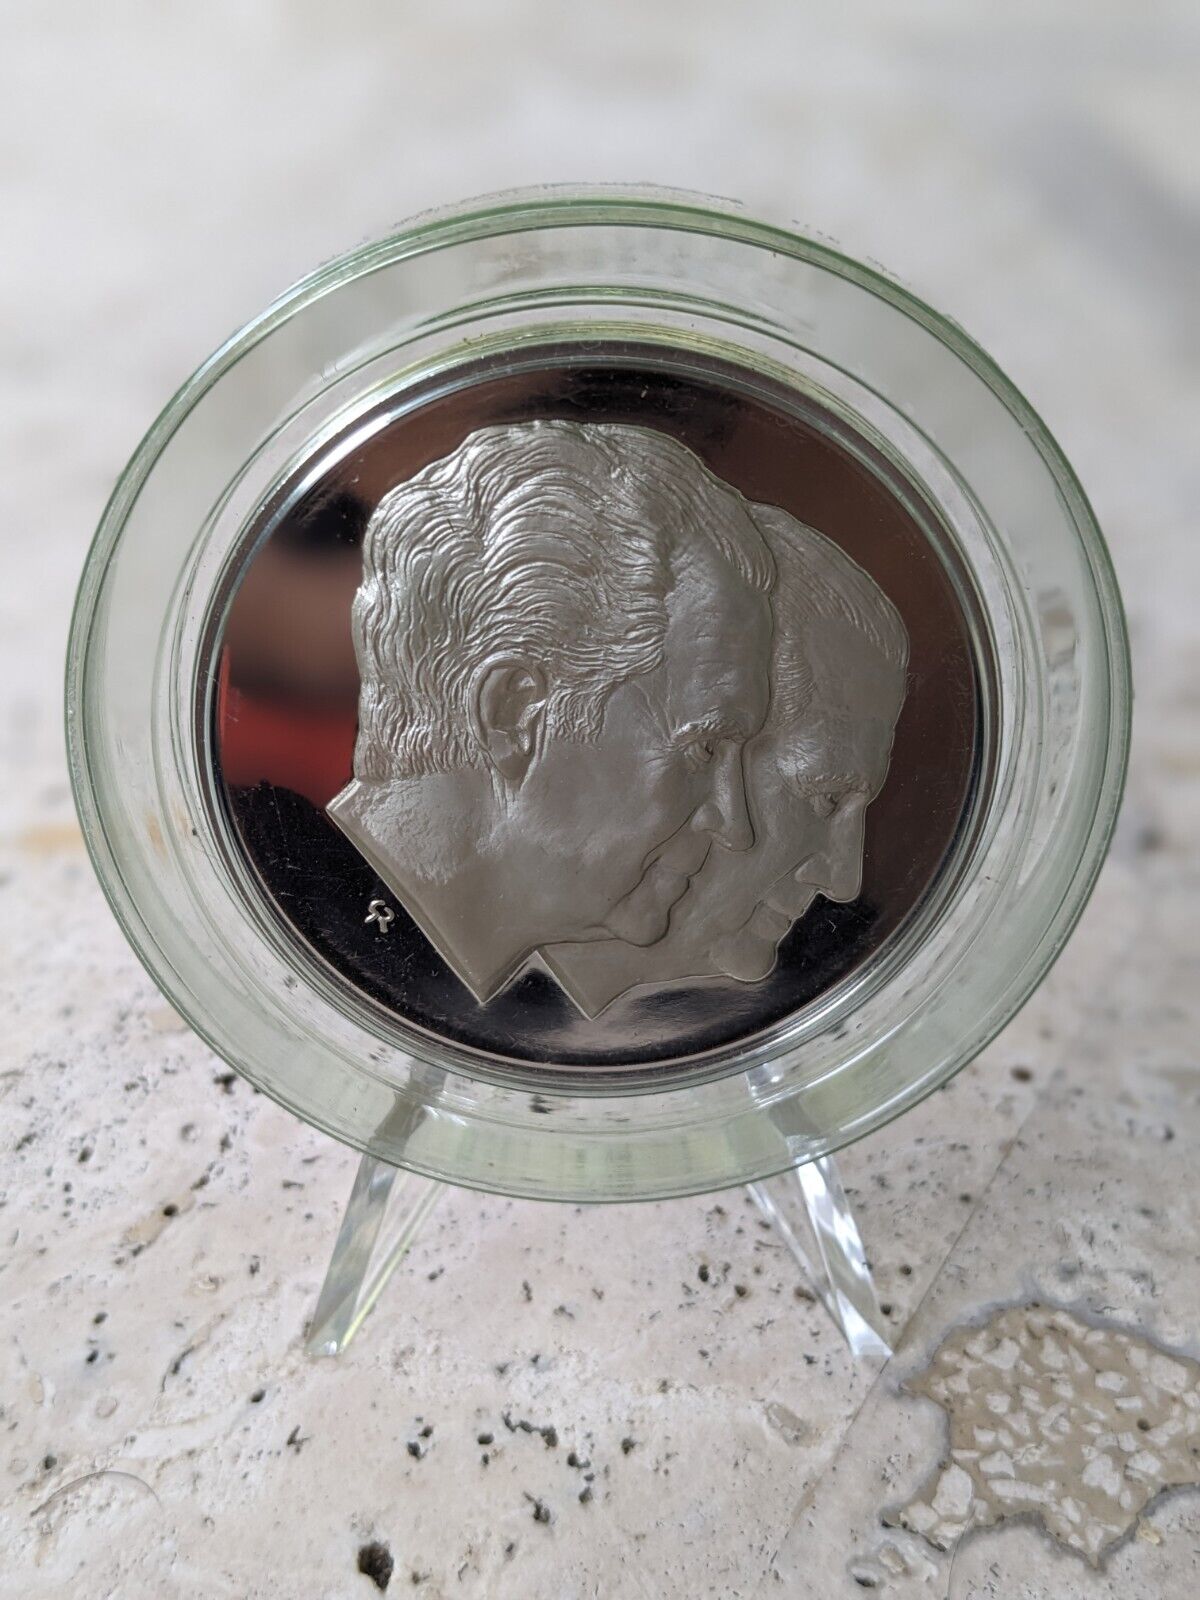 1973 Inaugural Medal Richard Nixon / Spiro Agnew - Sterling Silver Franklin Mint